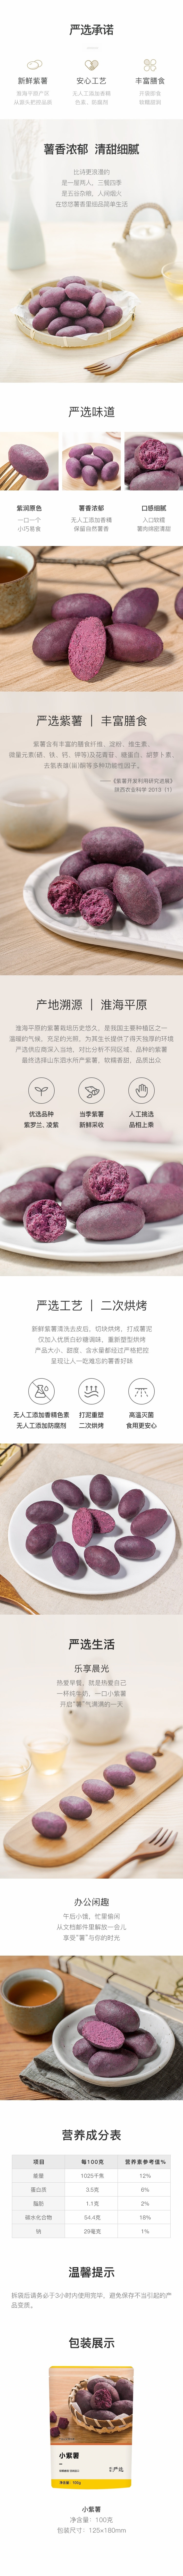 YANXUAN Purple Sweet Potatoes 100g*2Pcs